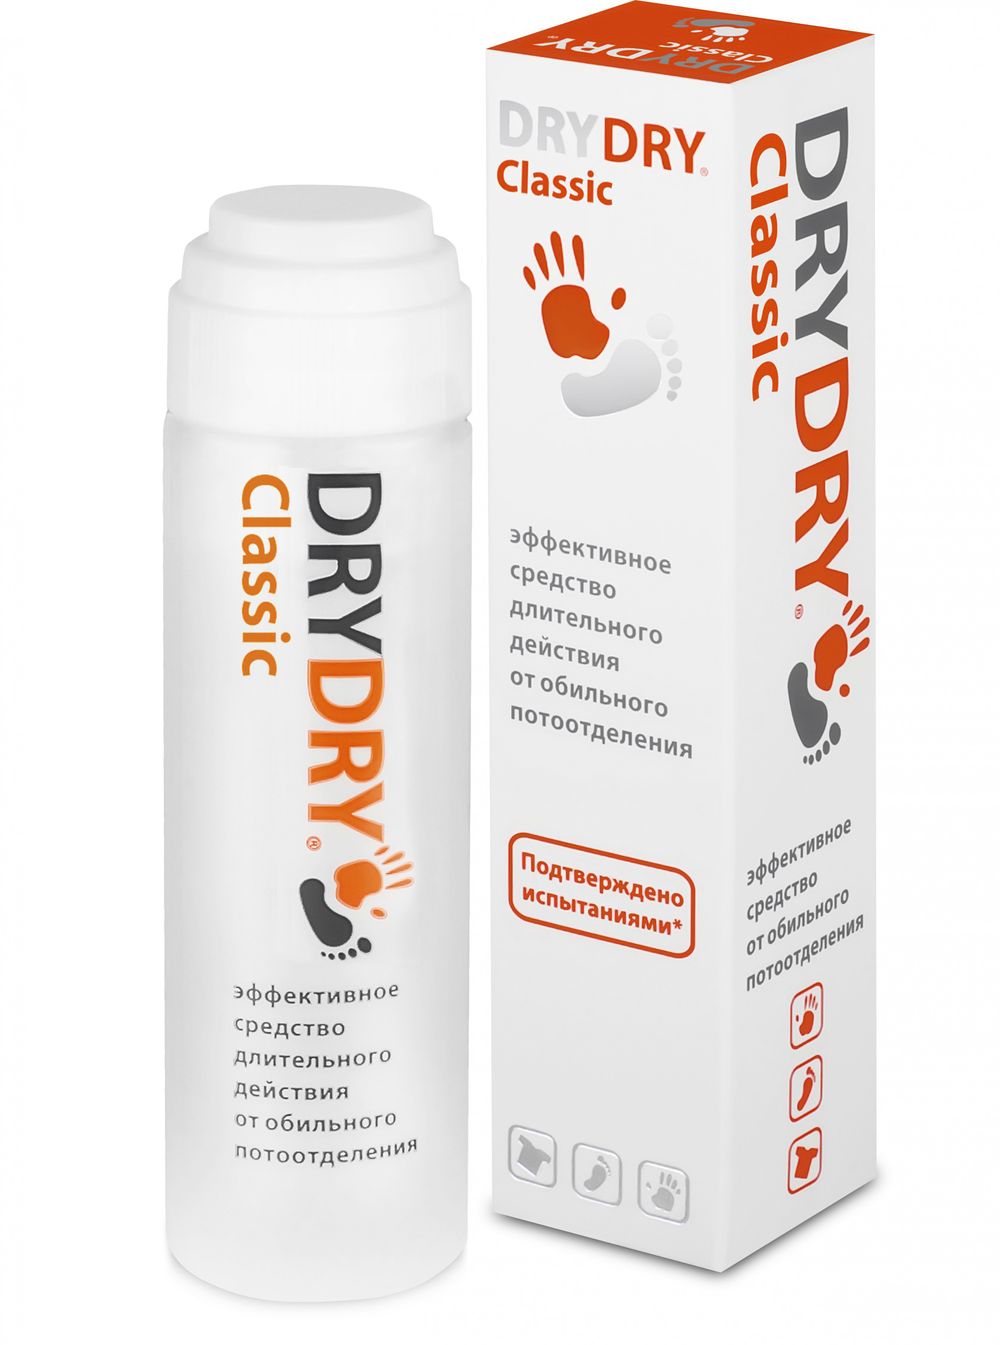 Dry Dry Classic от потливости рук